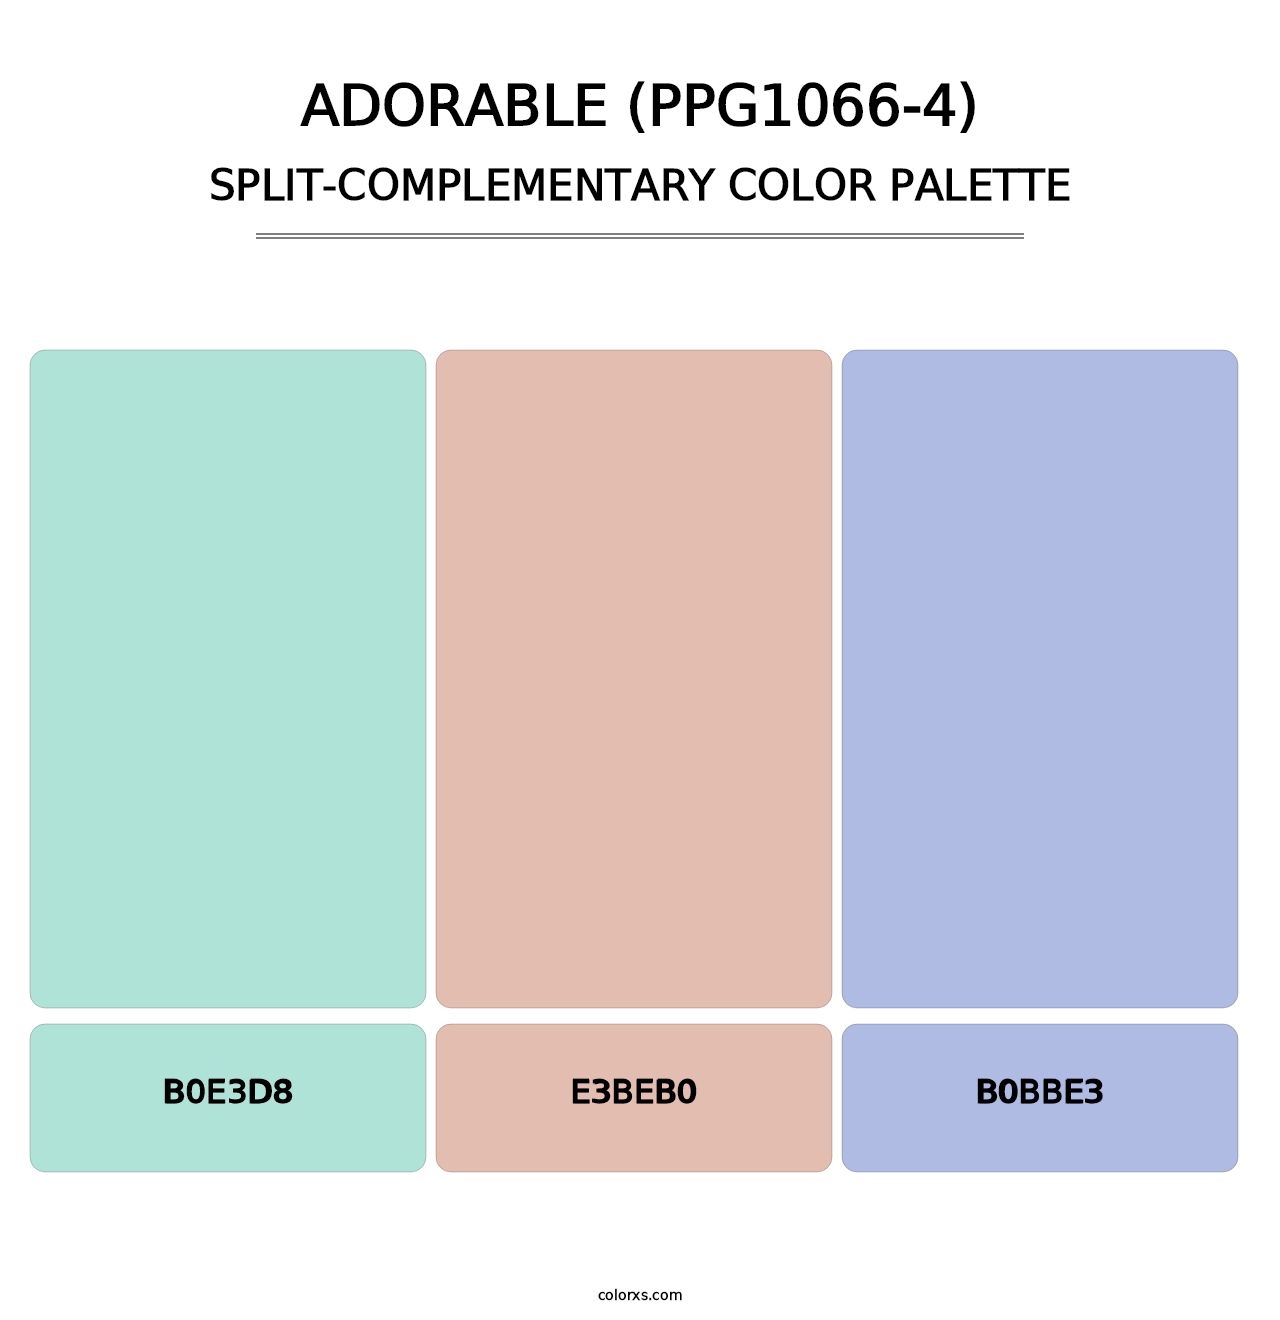 Adorable (PPG1066-4) - Split-Complementary Color Palette